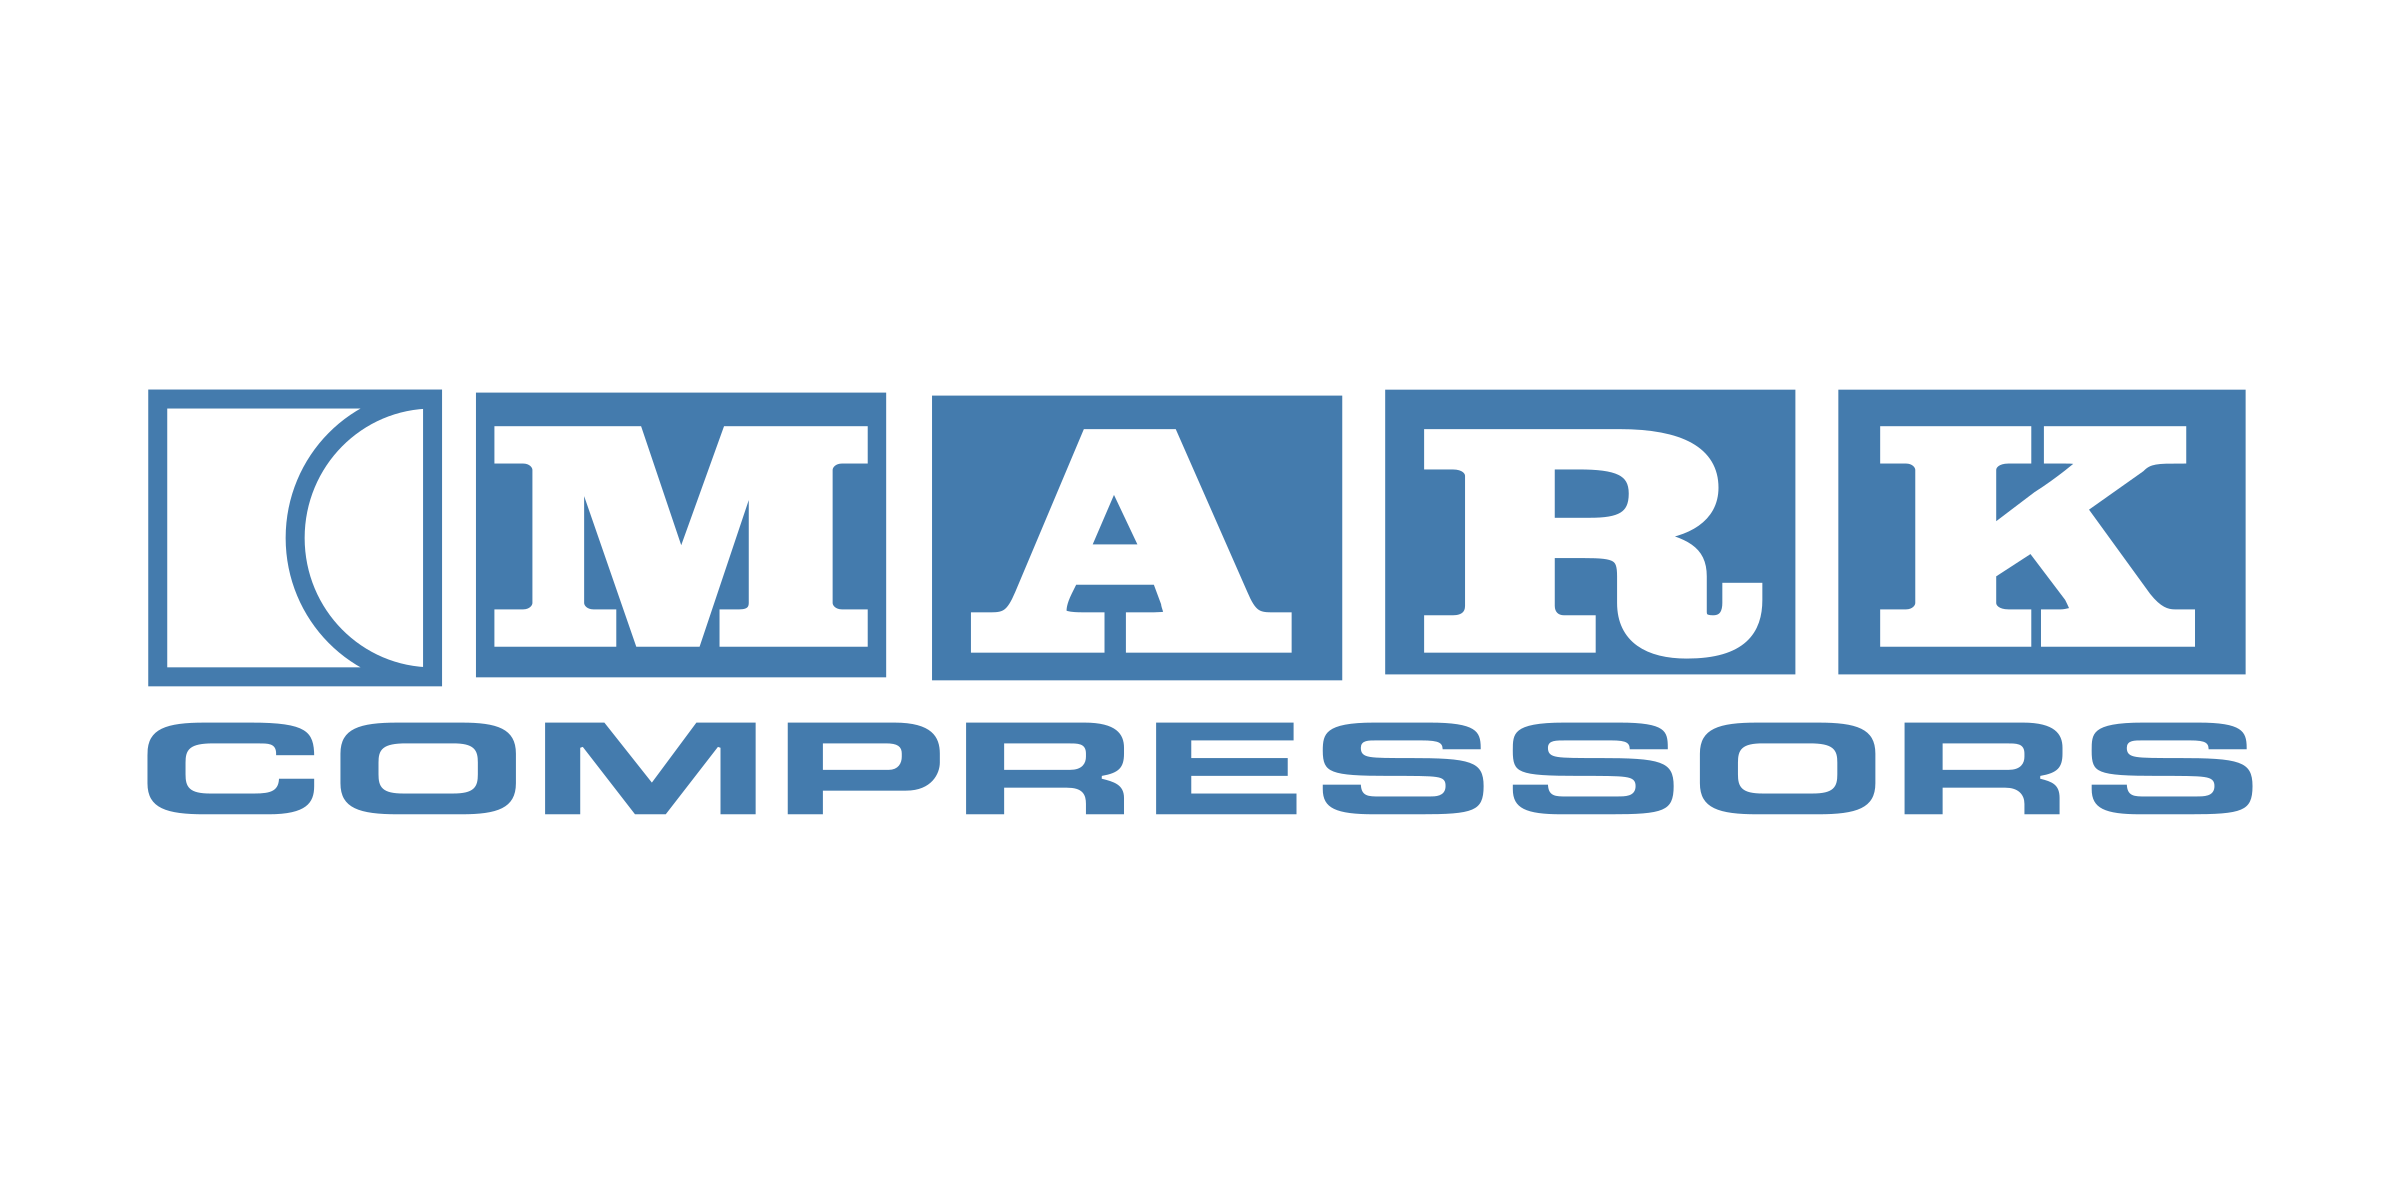 Mark Compressors logo